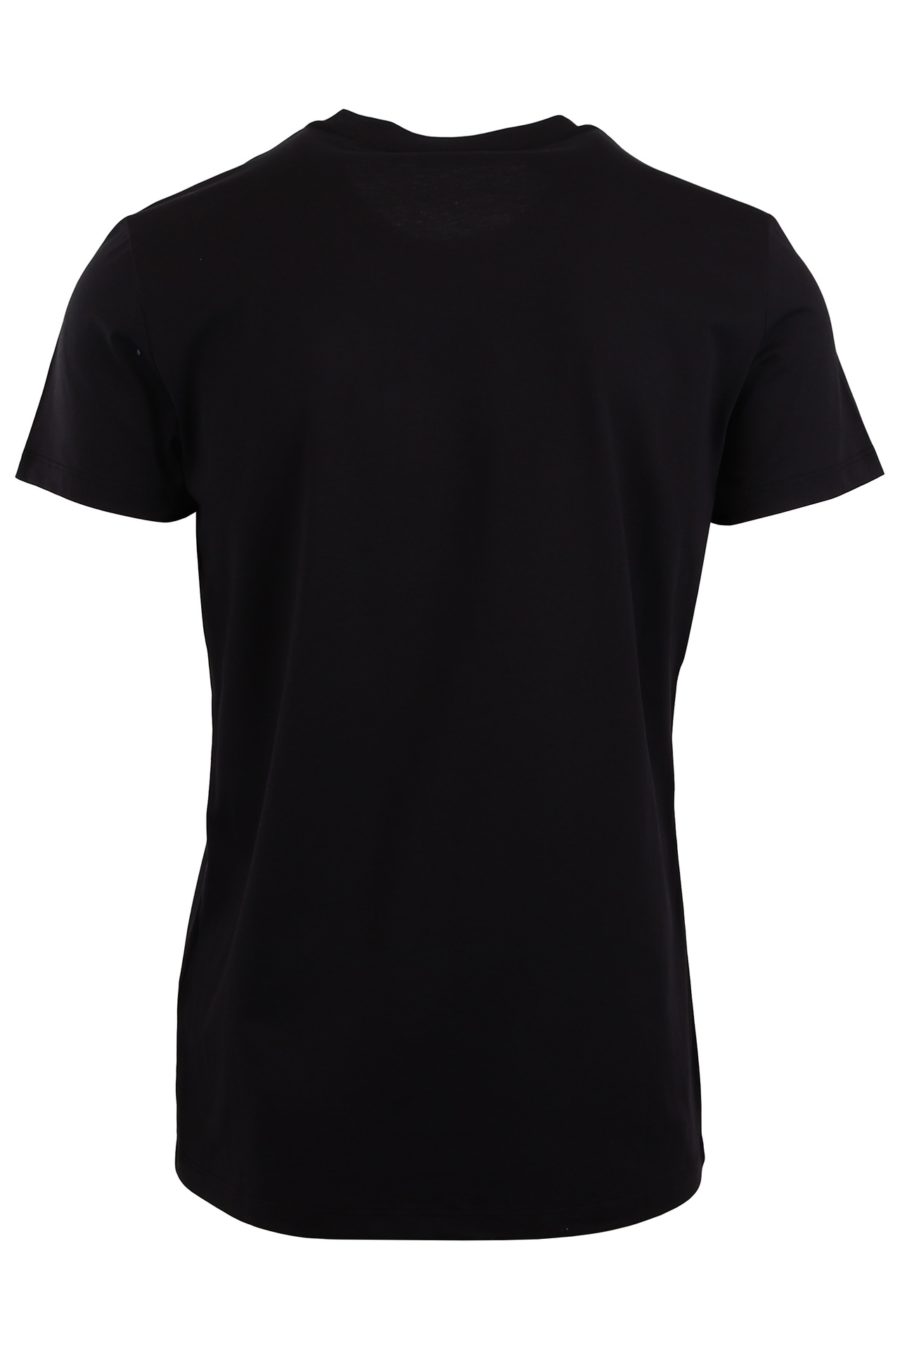 Camiseta de algodón sostenible Balmain negra con logo pequeño - 5c83214b5cc543bfcb774c5bb9cca6107be5c1b6